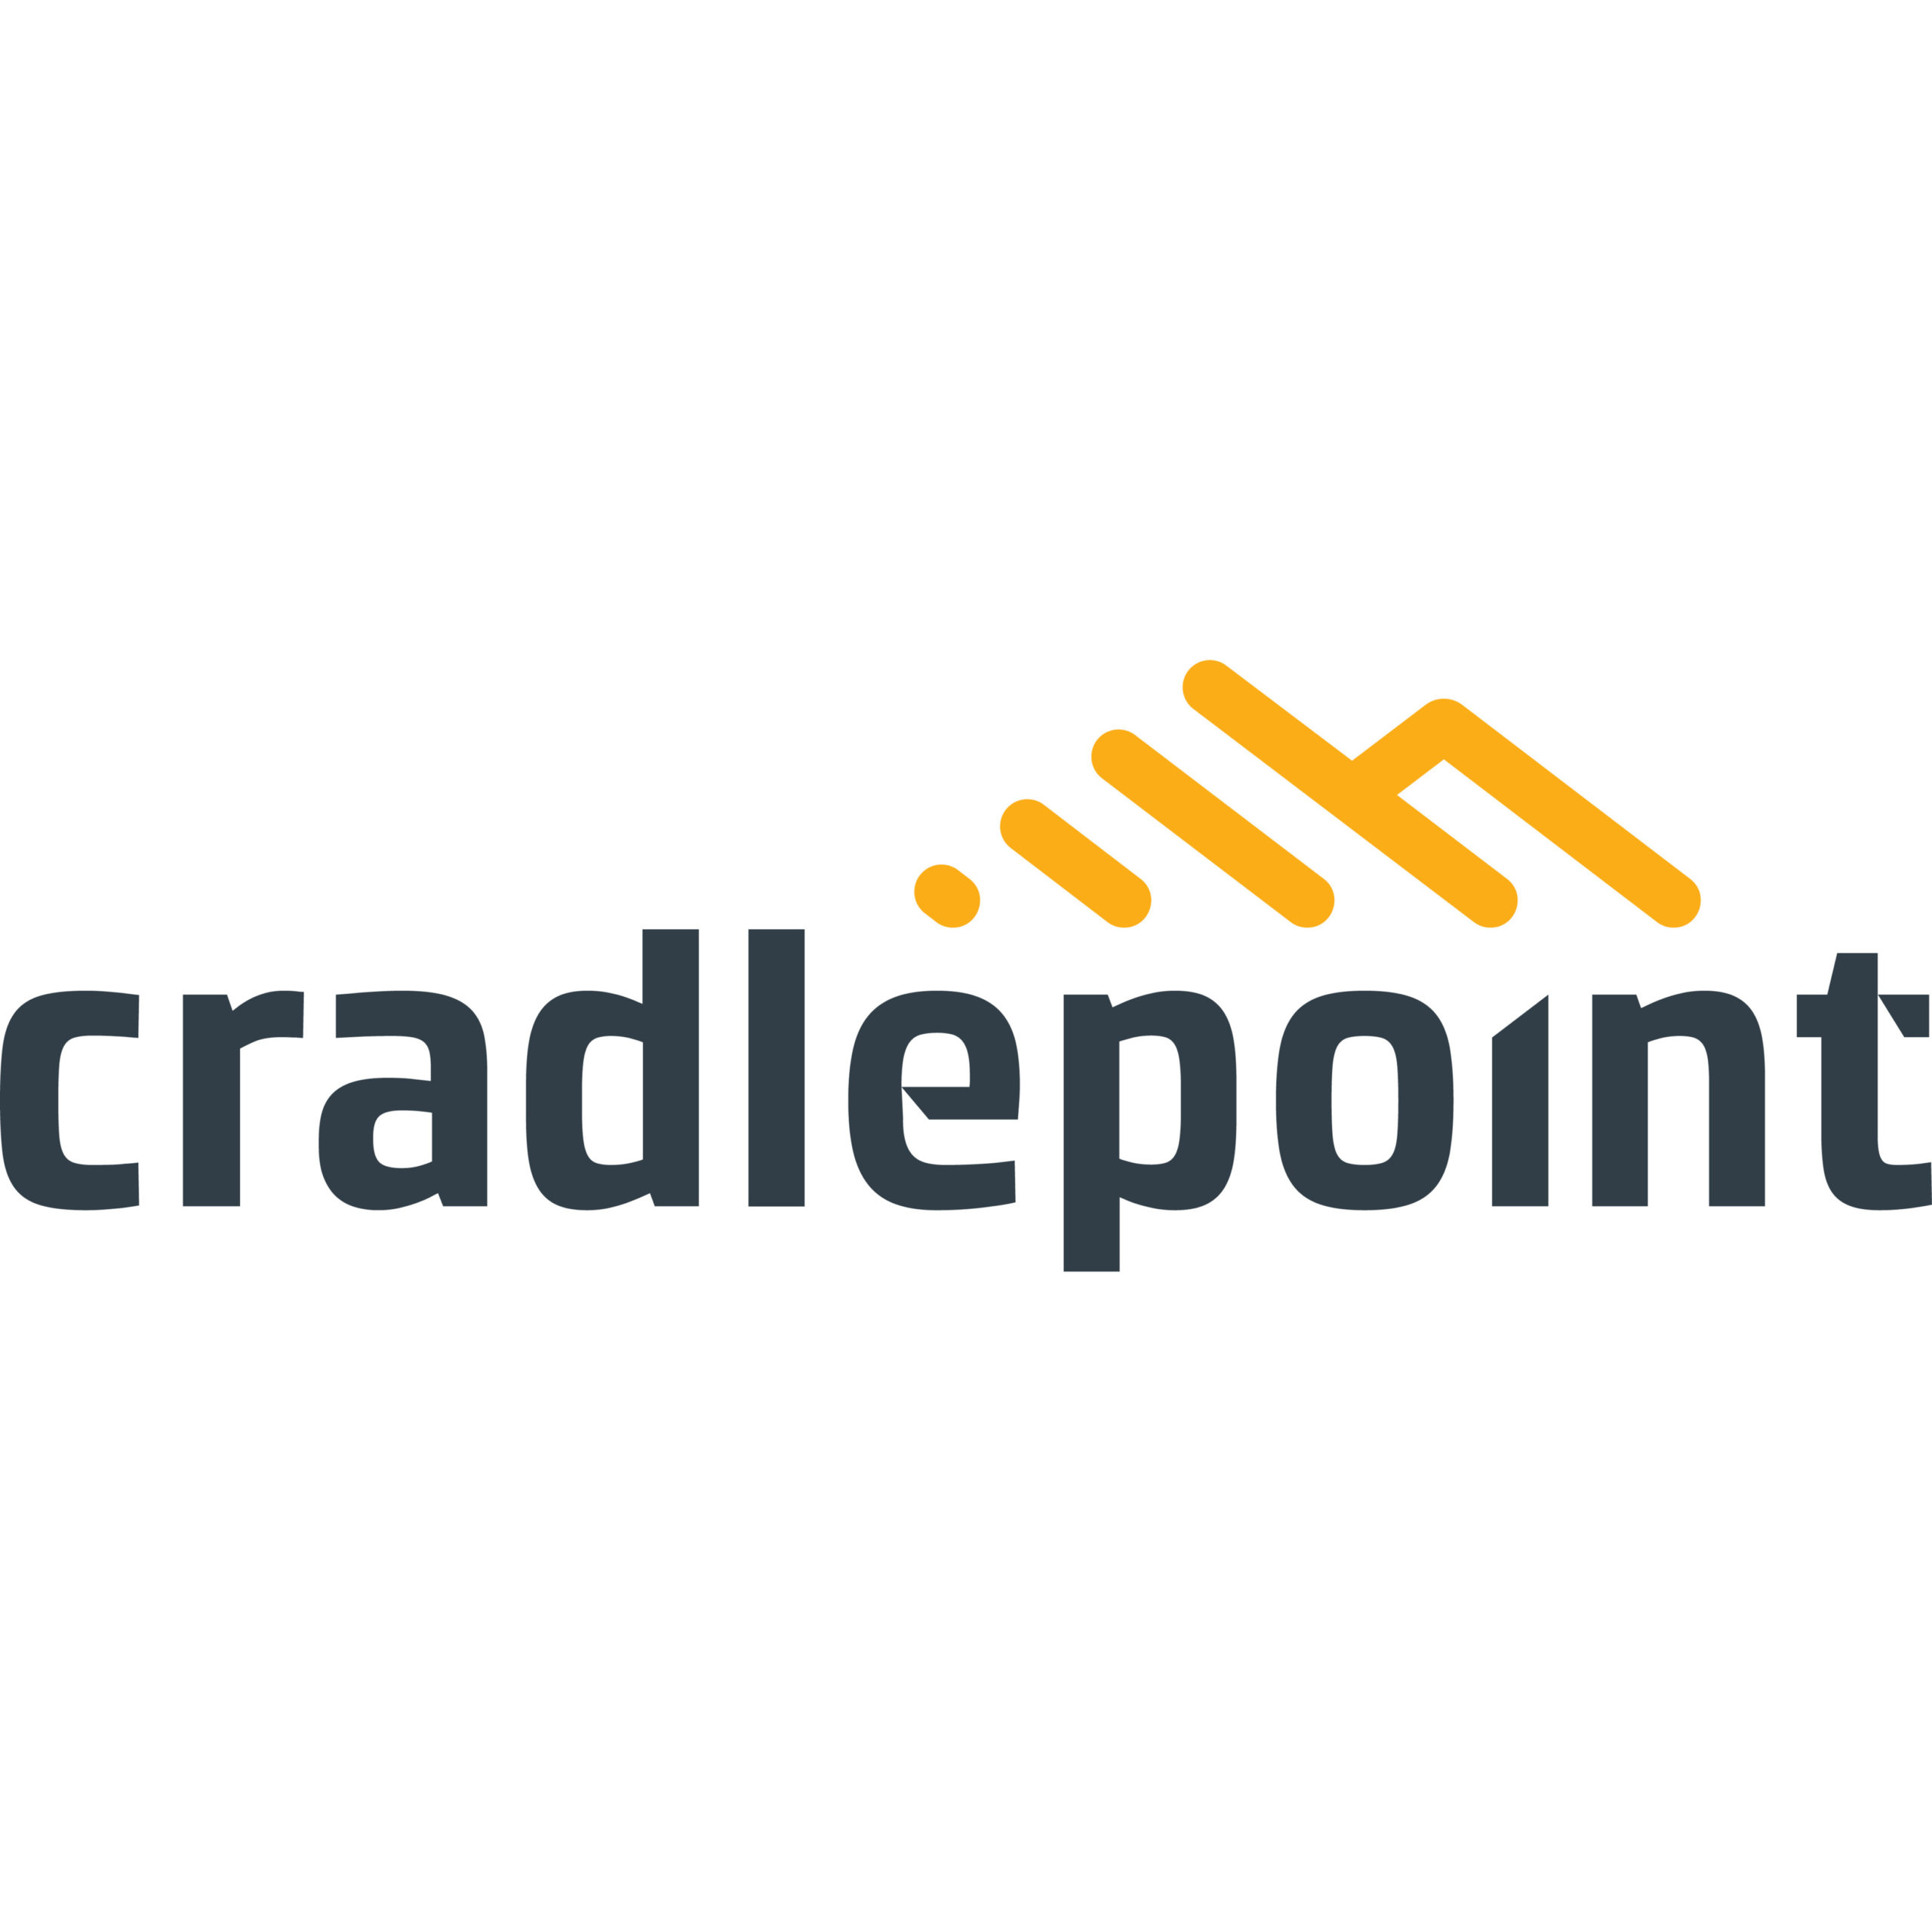 CradlePoint NetCloud Advanced for Branch Performance (Enterprise)Subscription License BD1-NCADV